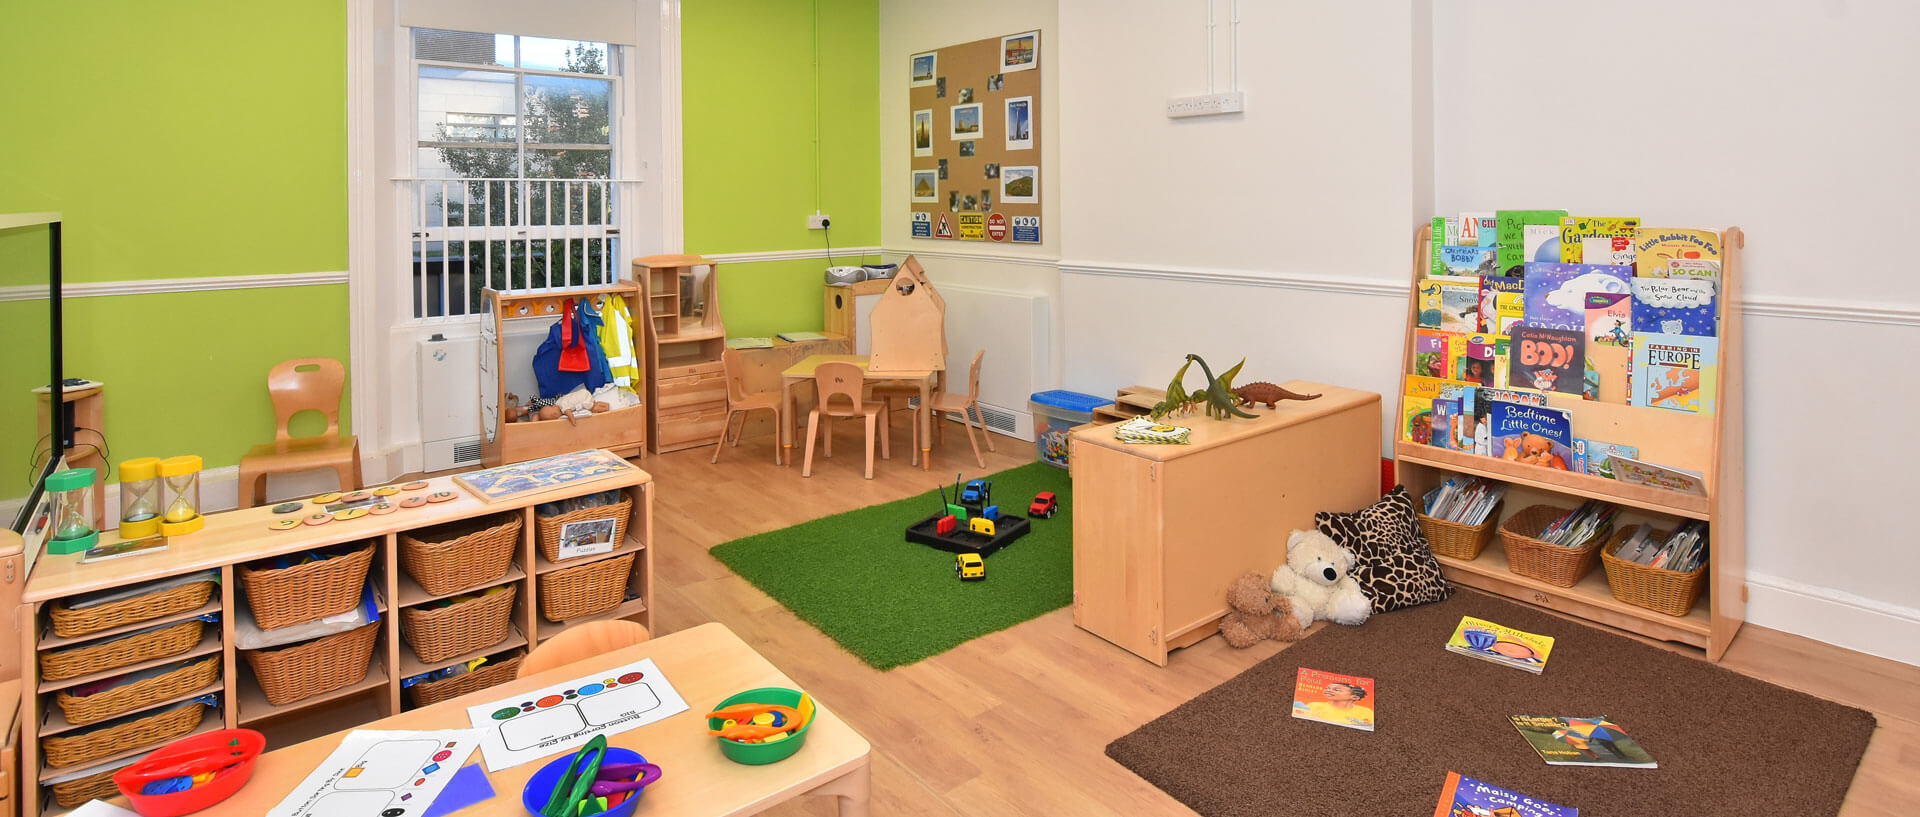 Asquith Epsom Day Nursery and Preschool